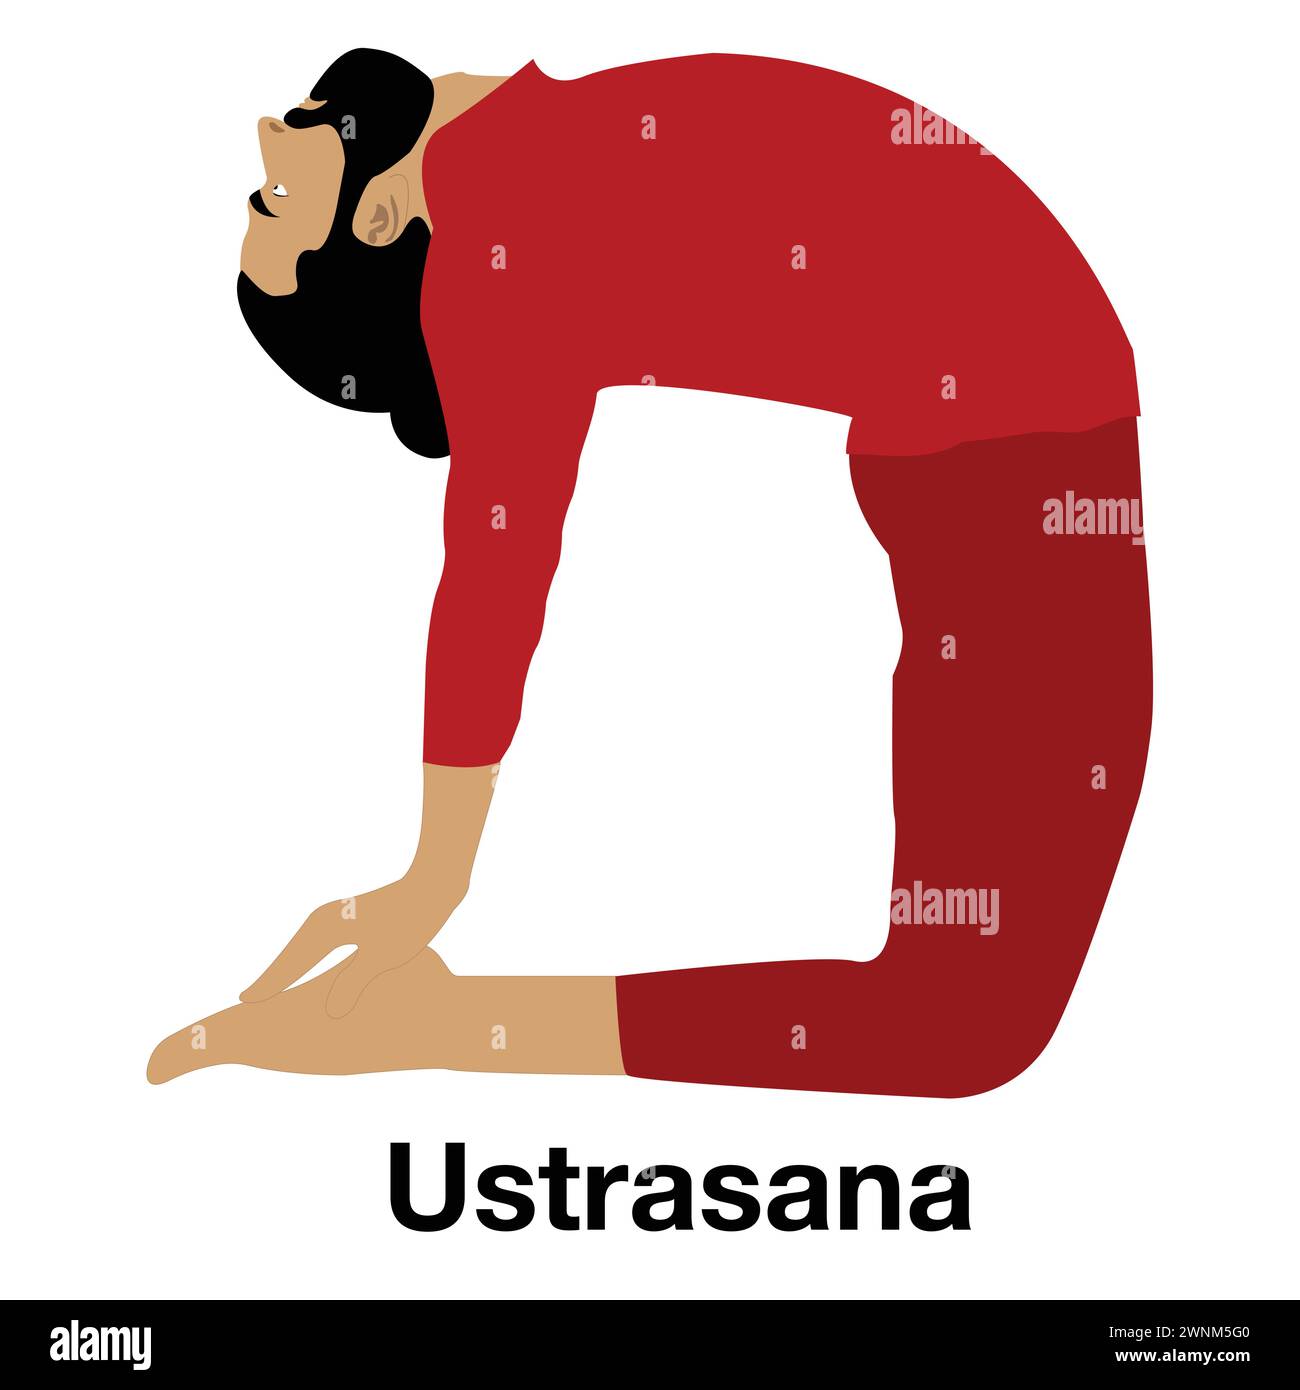 Ustrasana yoga pose vector illustration Stock Vector